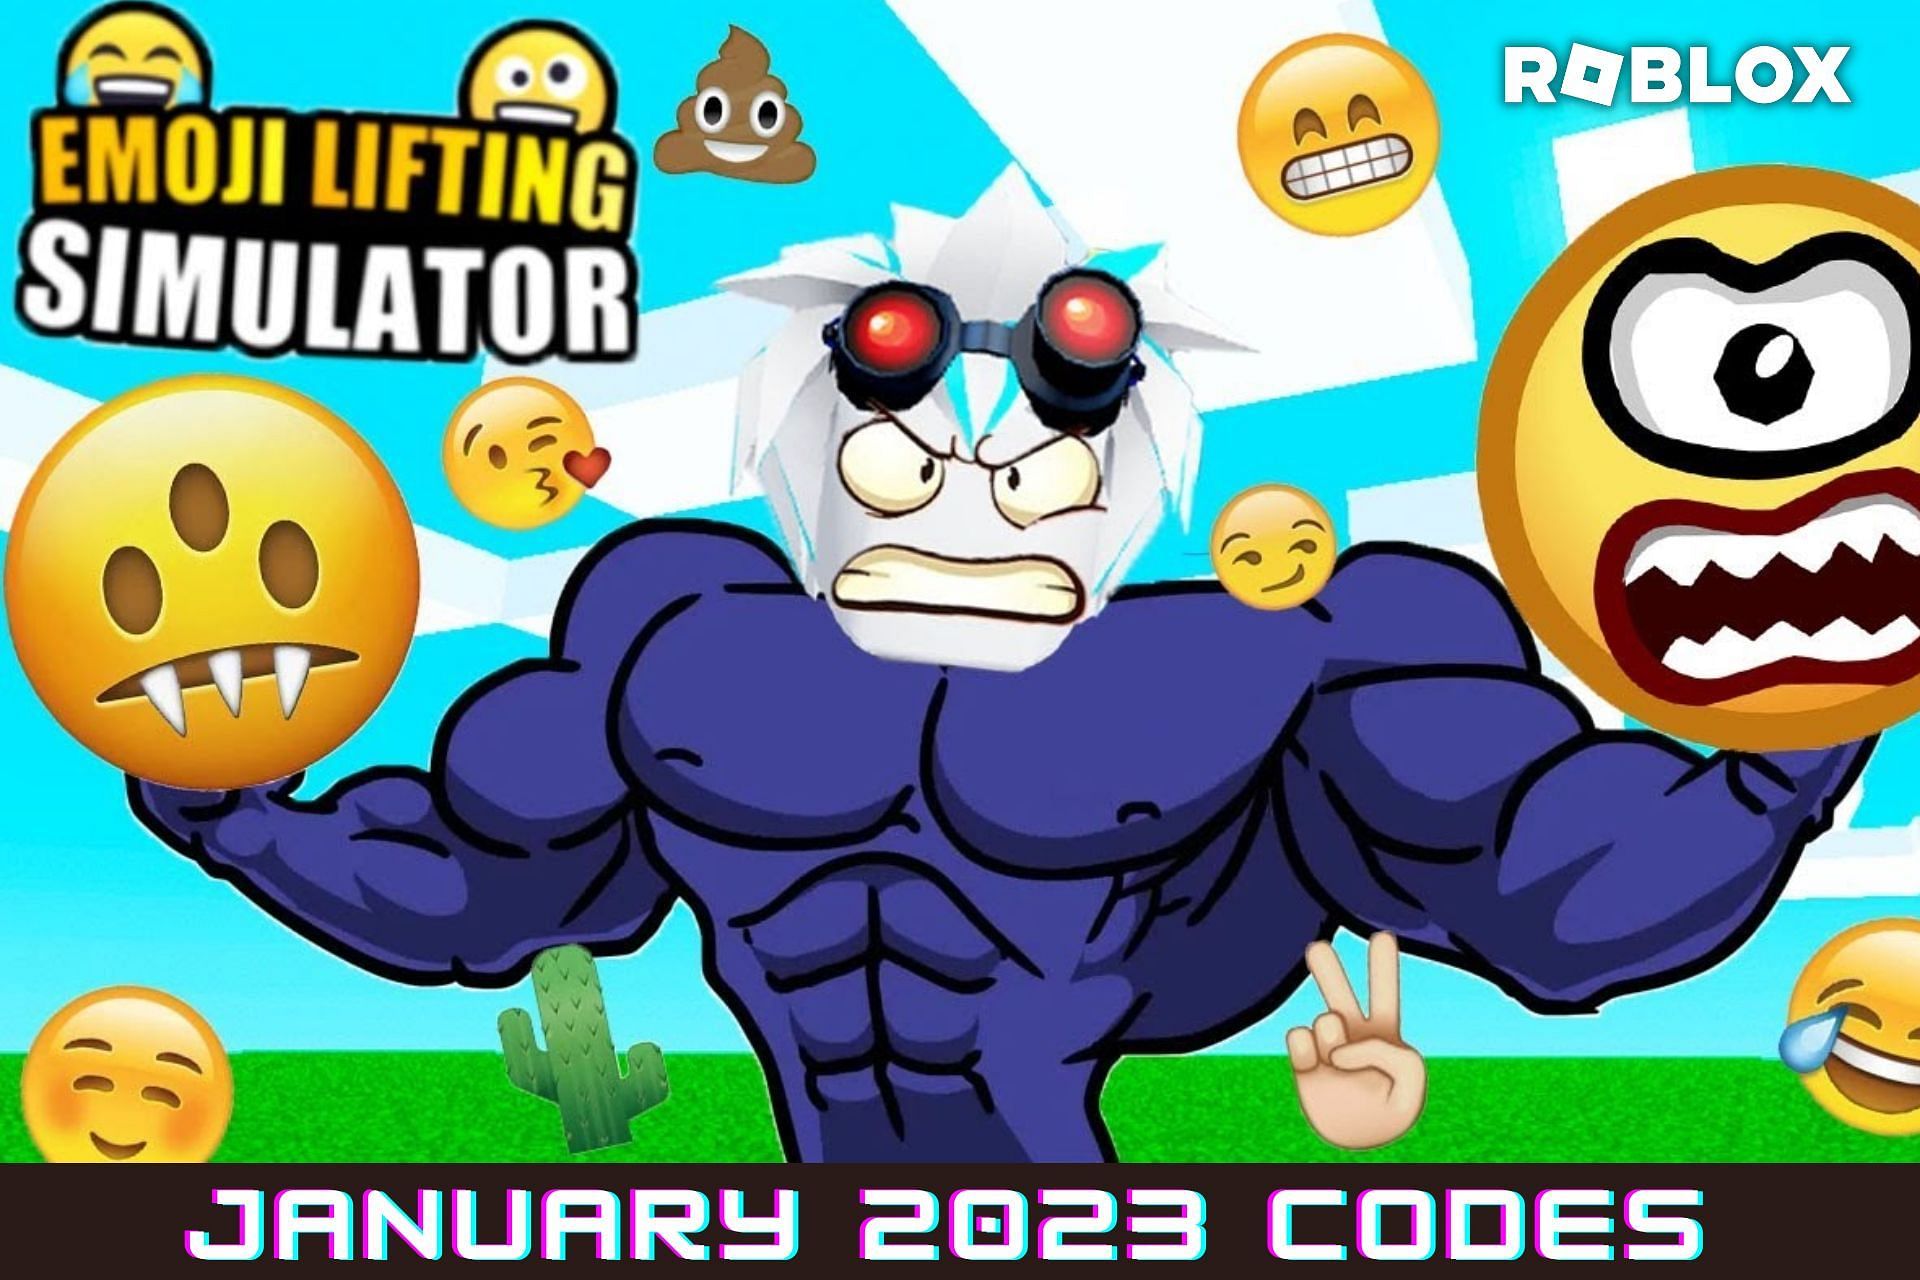 Roblox Emoji Lifting Simulator Codes for January 2023: Free items